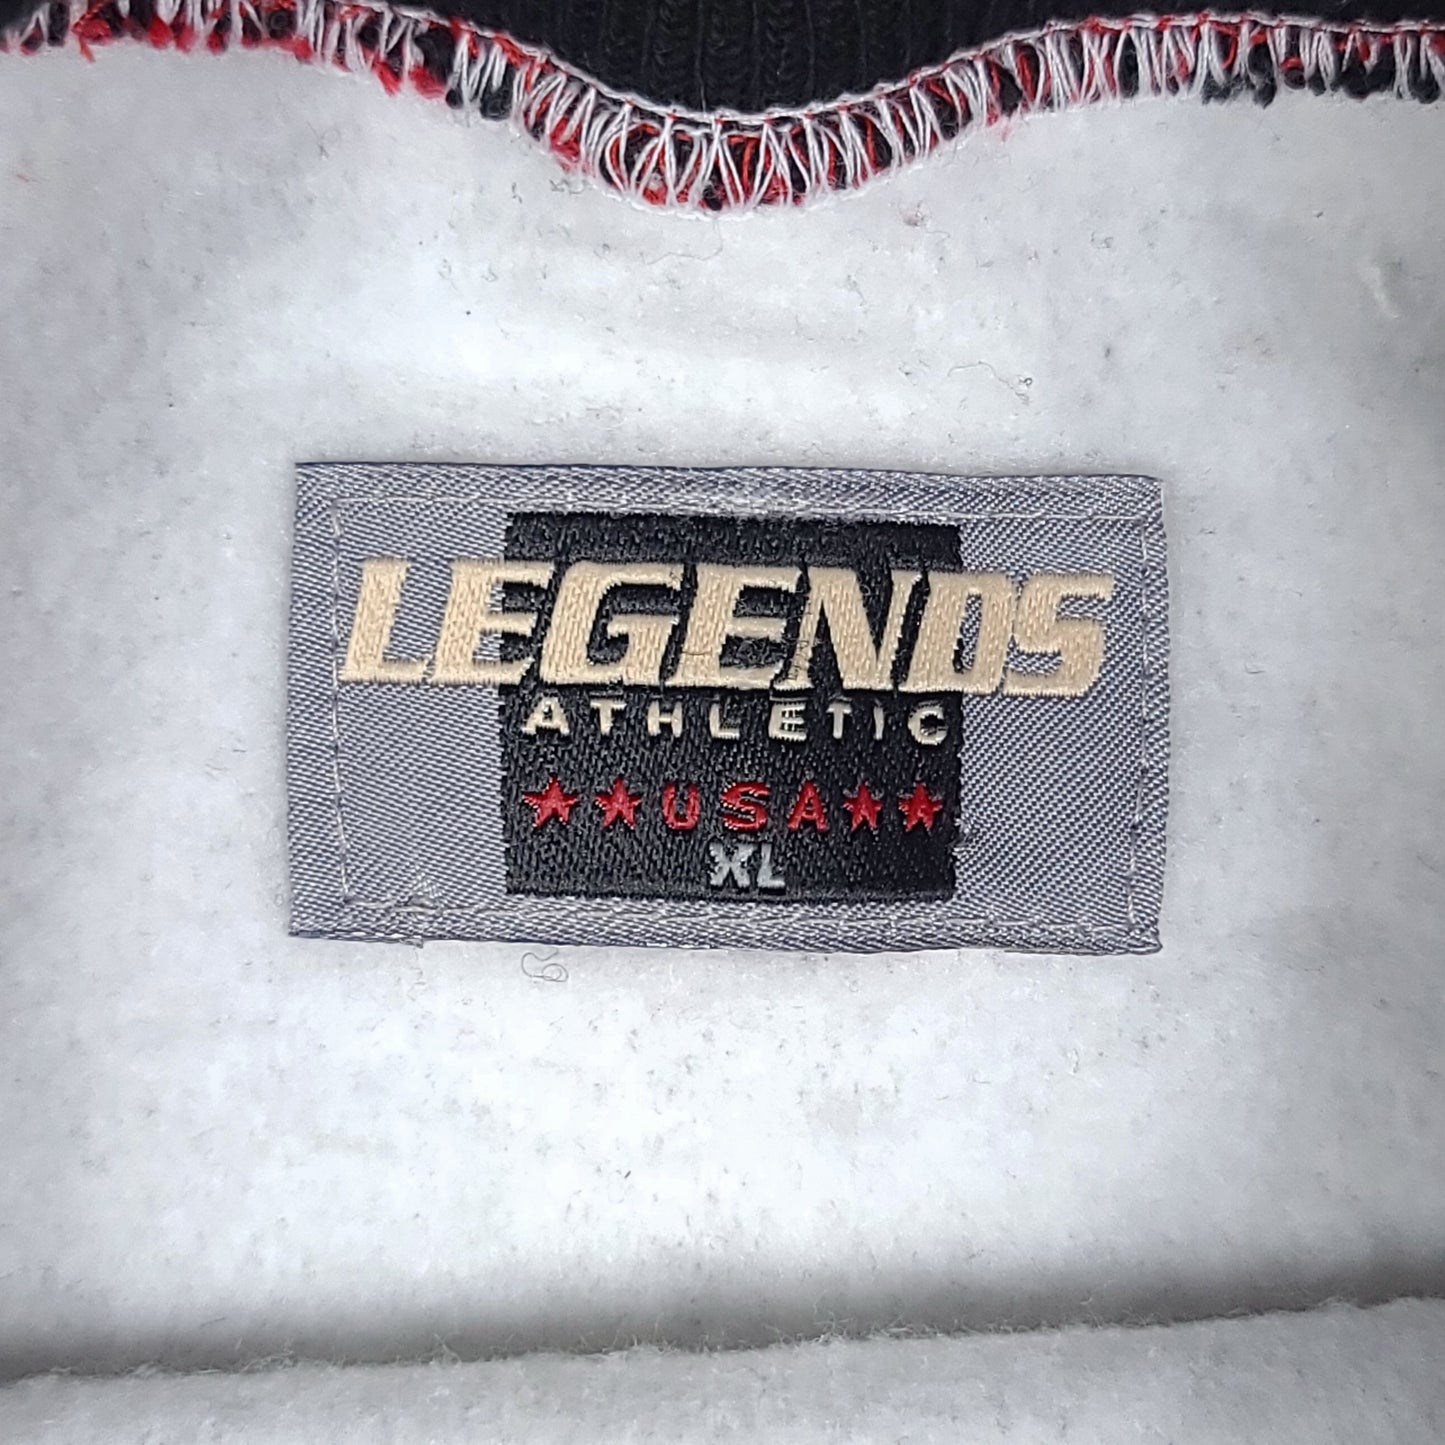 Vintage Chciago Bulls Spell Out 1996 Champs Legends Athletic Sweatshirt